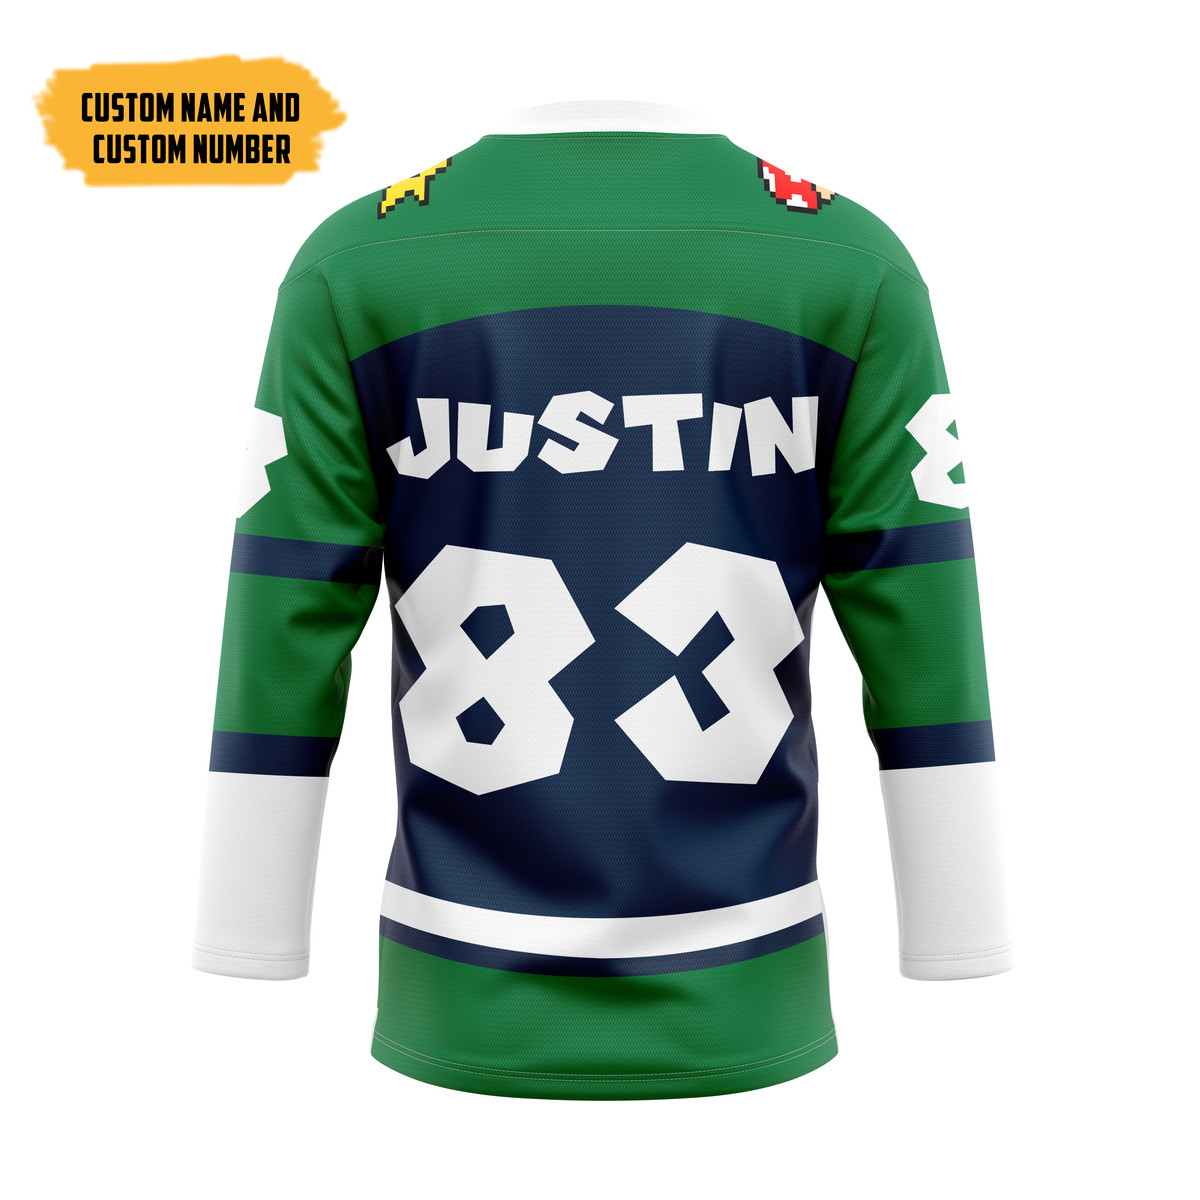 Personalized Luigi Sports Hockey Jersey2